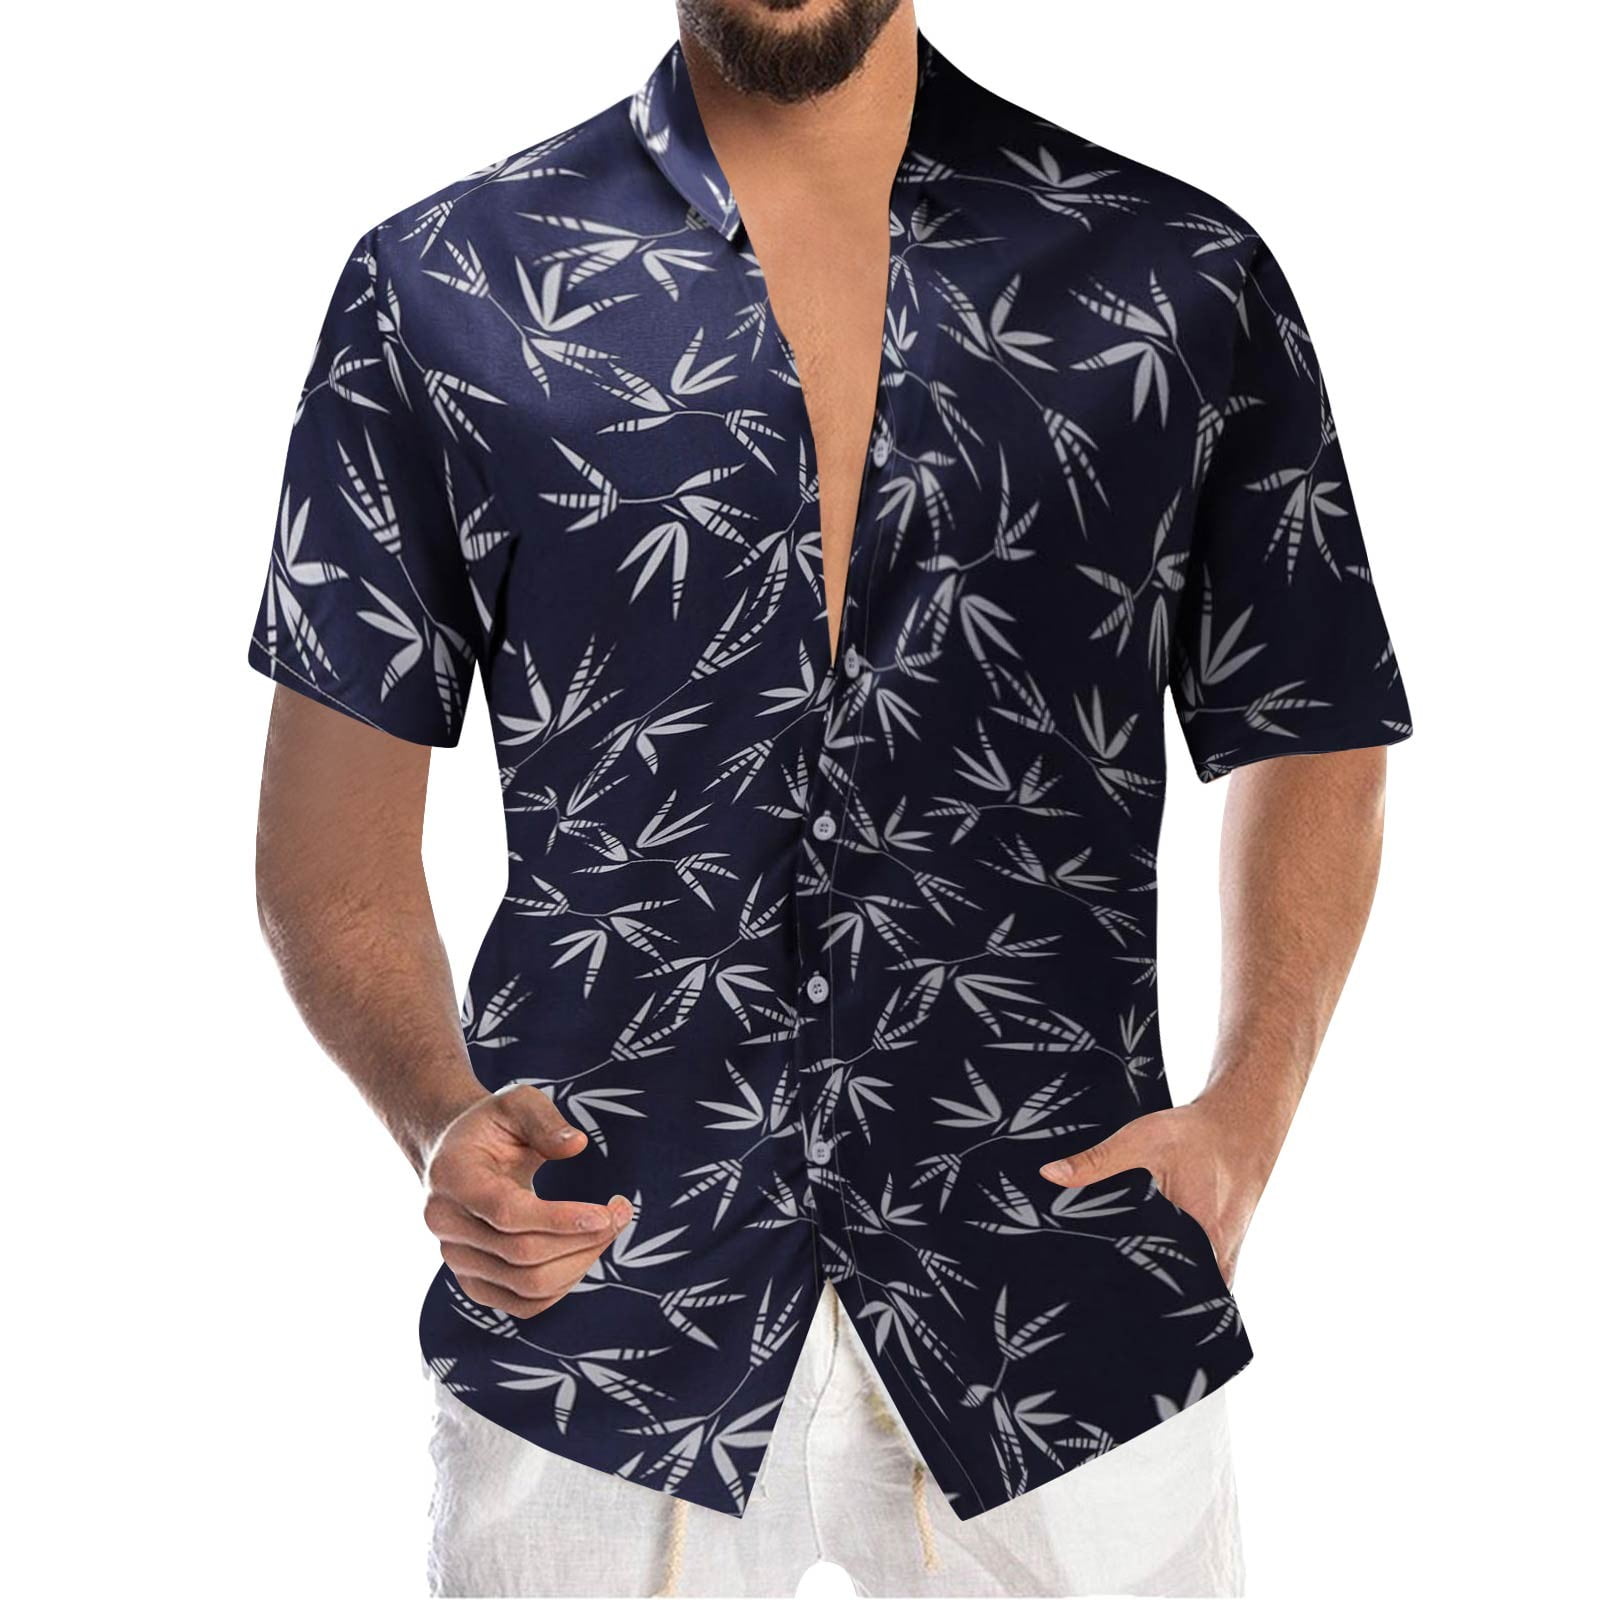 adviicd Men's Summer Fashion Shirt Leisure Seaside Beach Hawaiian Short ...